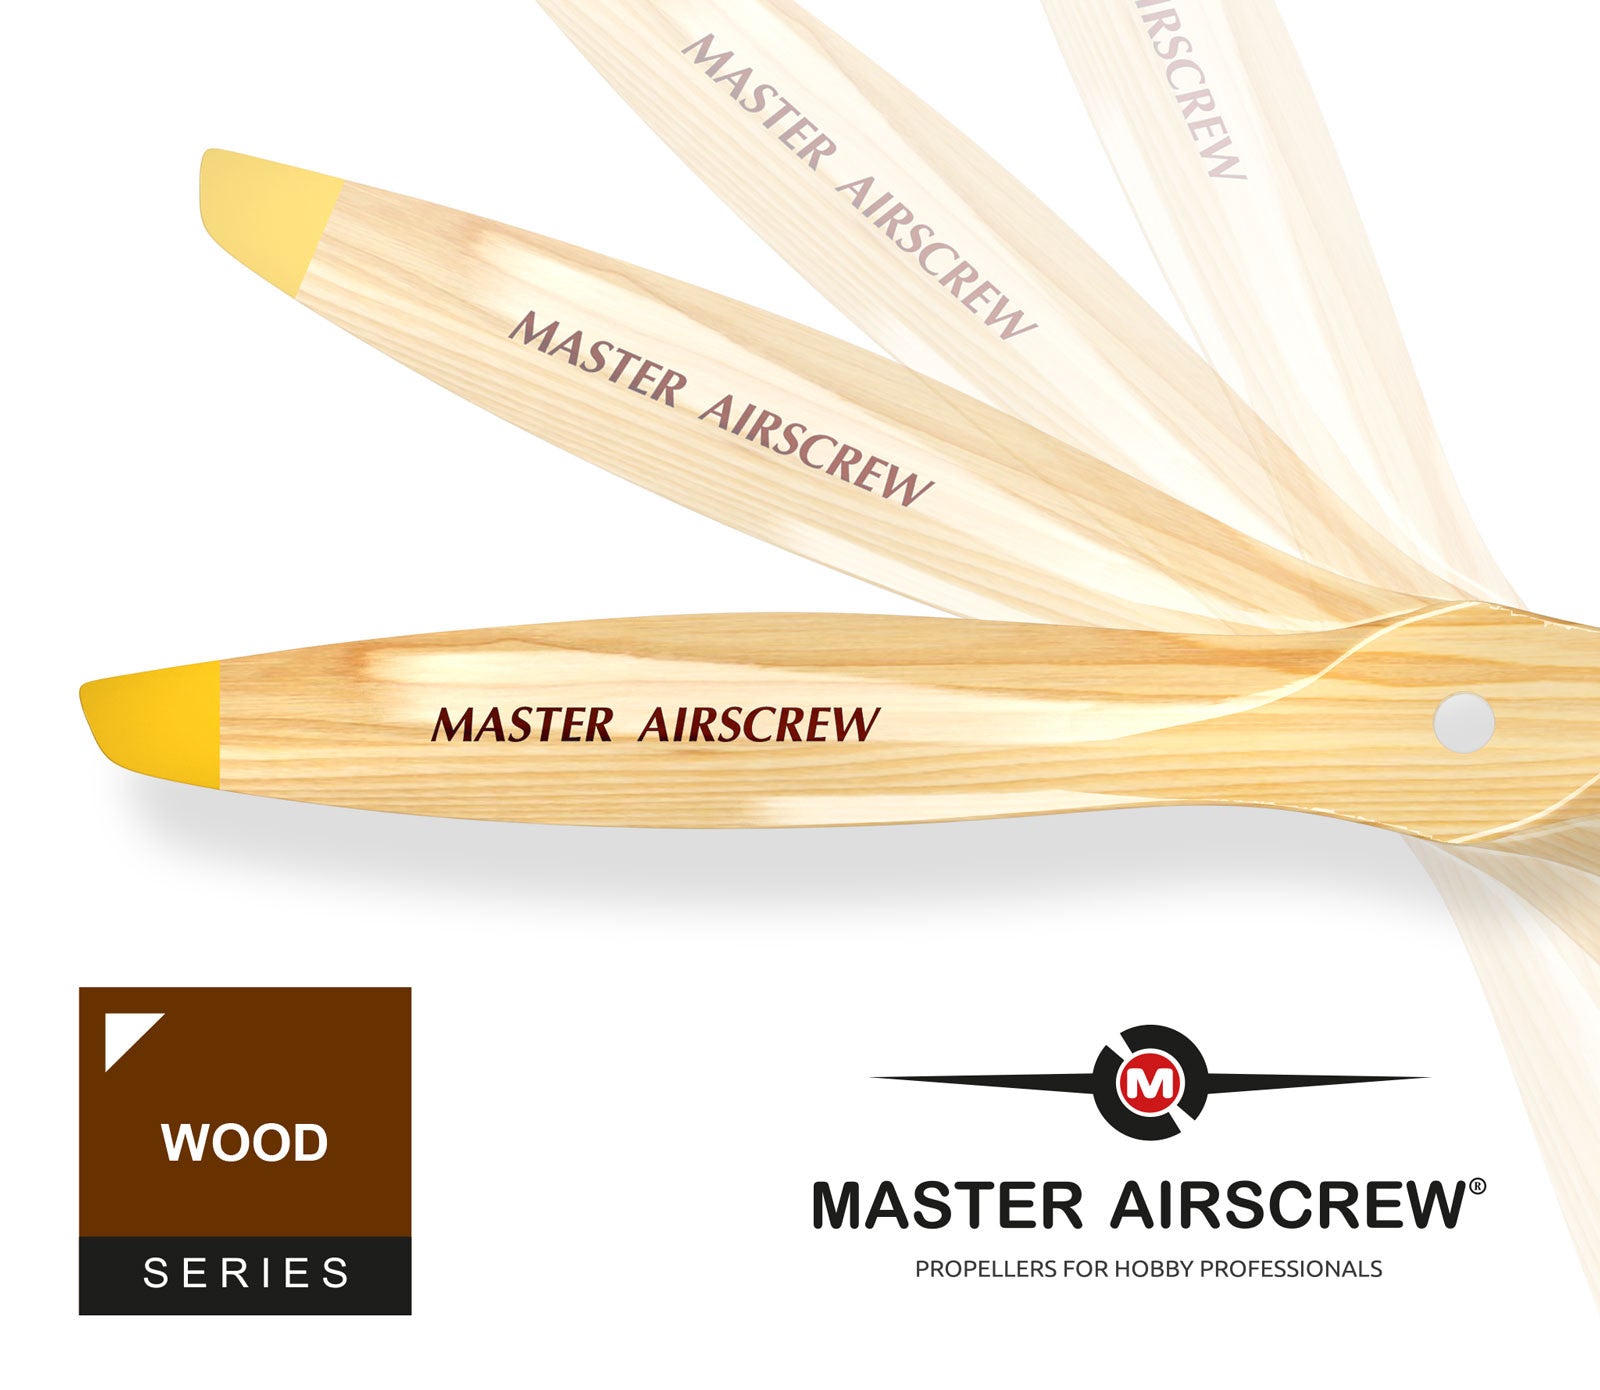 Wood-Maple - 24x12 Propeller - Master Airscrew